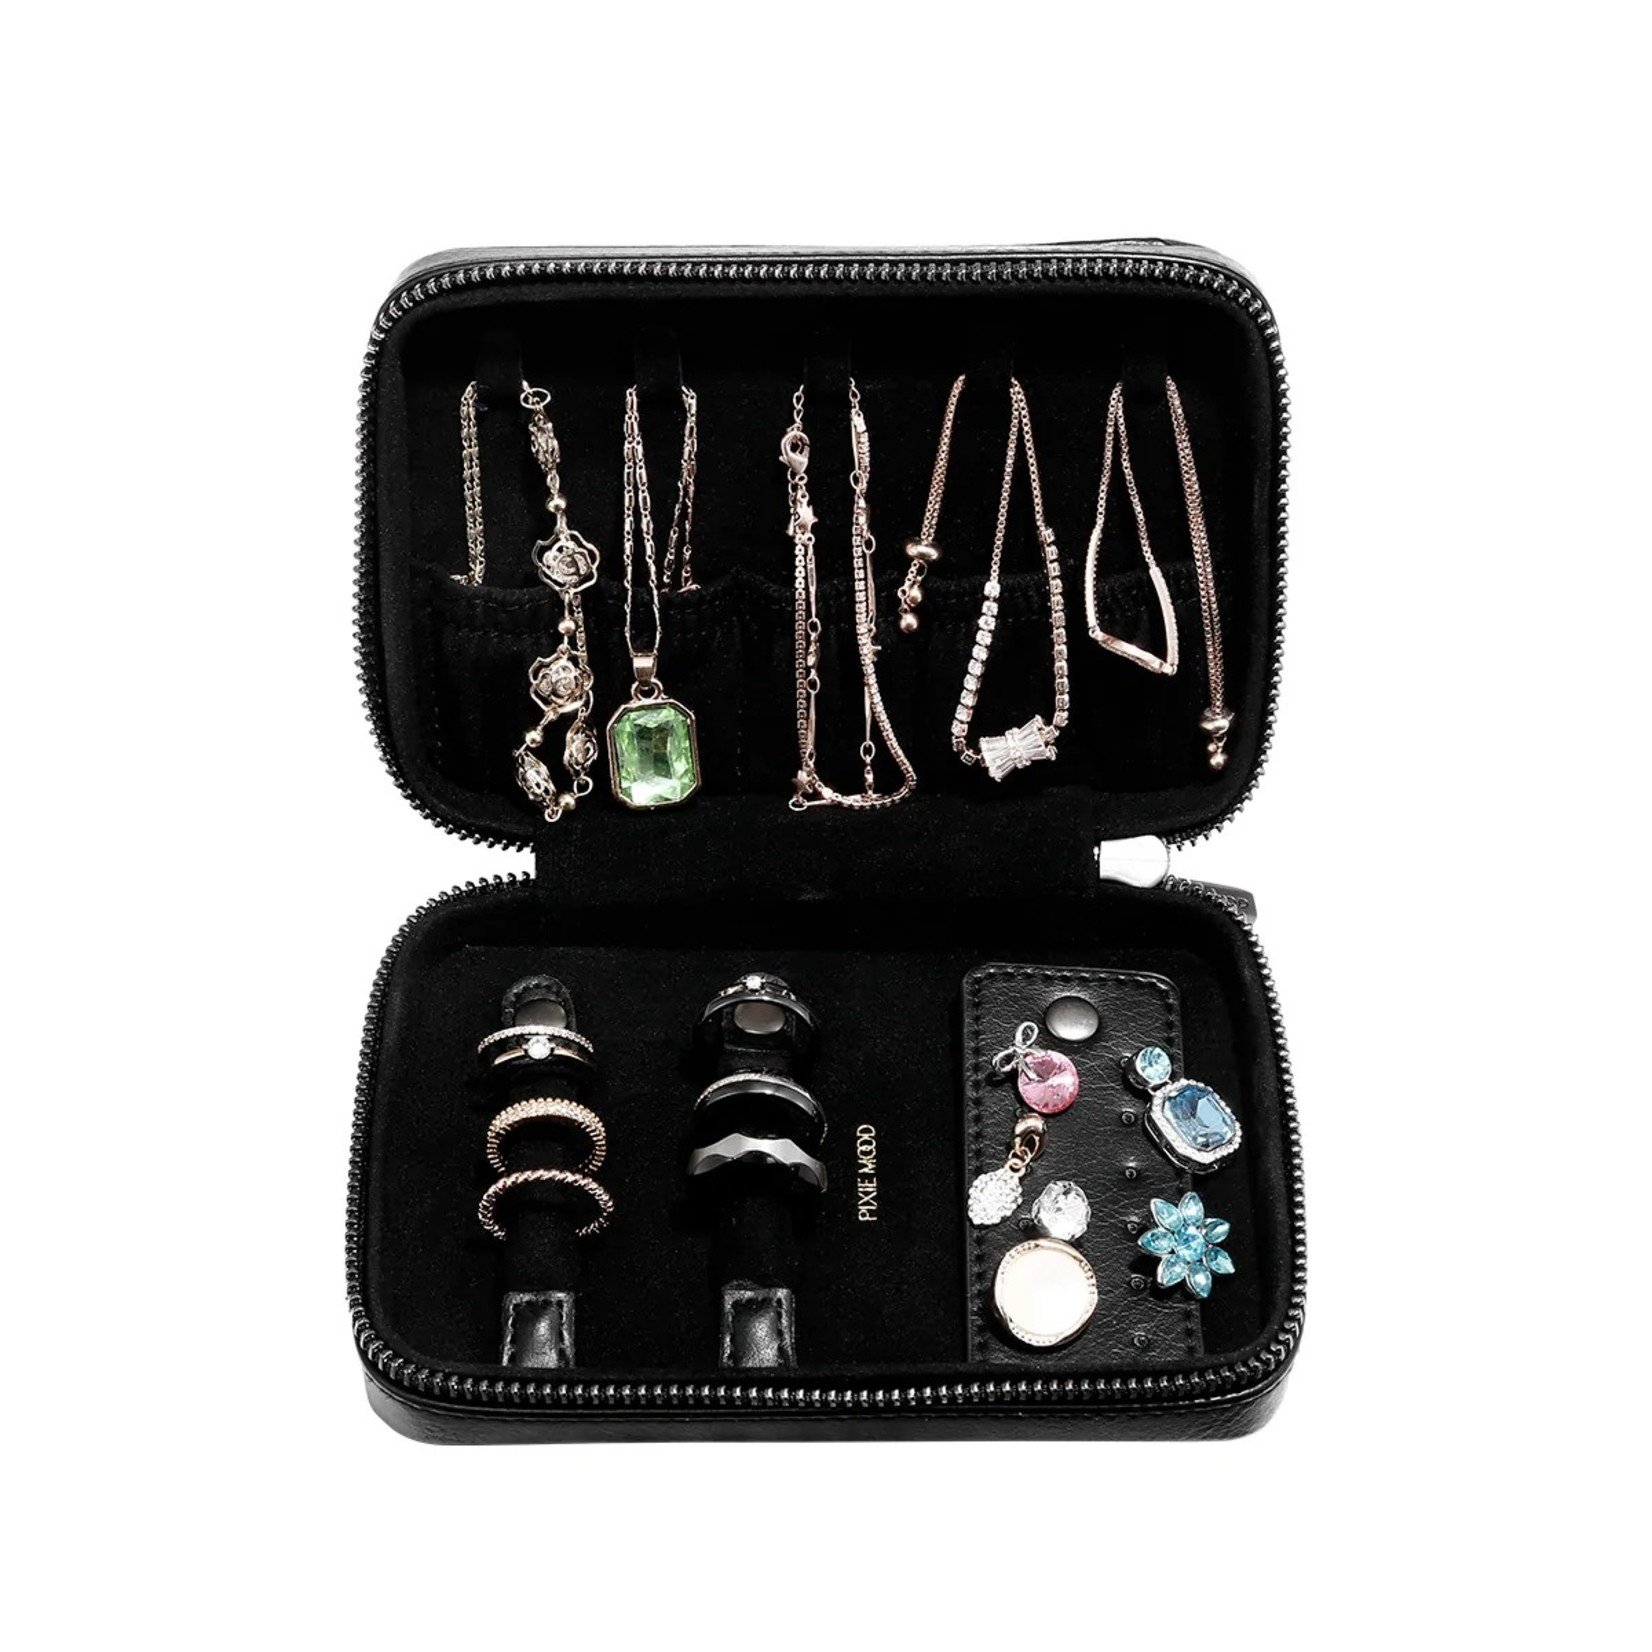 Pixie Mood Blake Jewelry Case - Small